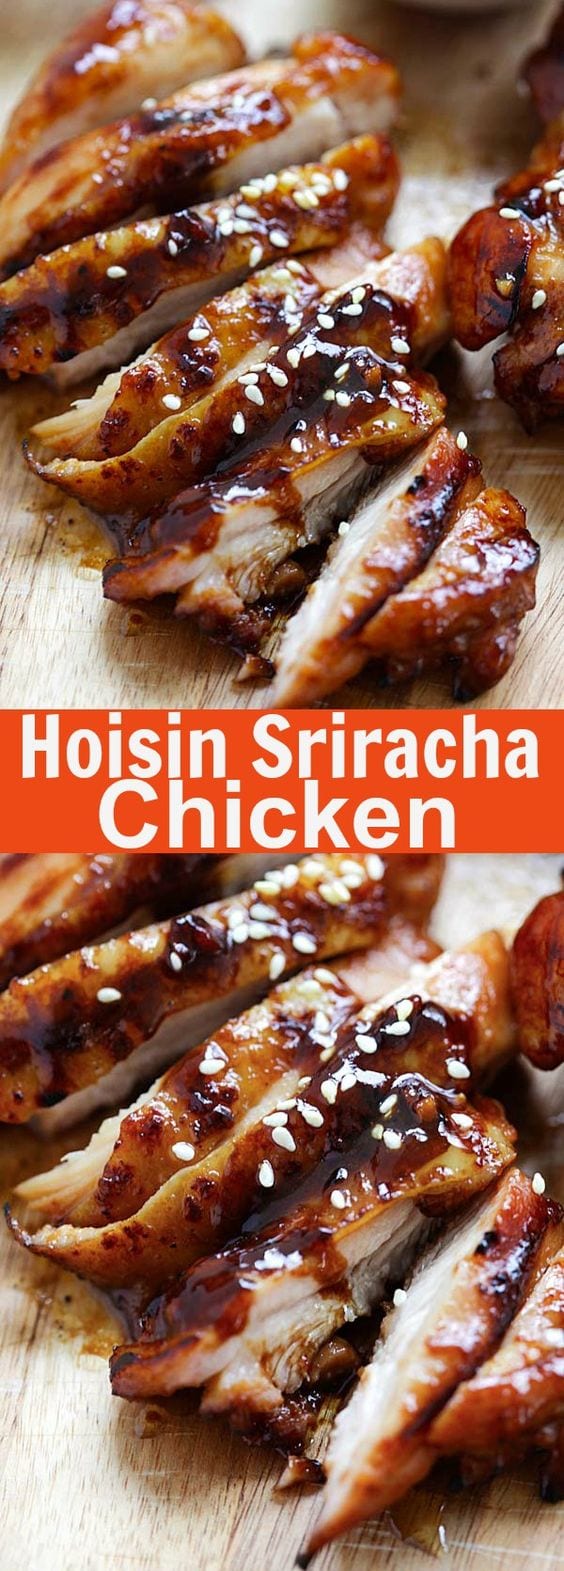 Hoisin Sriracha Chicken - Crazy delicious chicken dinner for the family! Marinated with hoisin, sriracha and honey. Takes 20 mins and so good | rasamalaysia.com